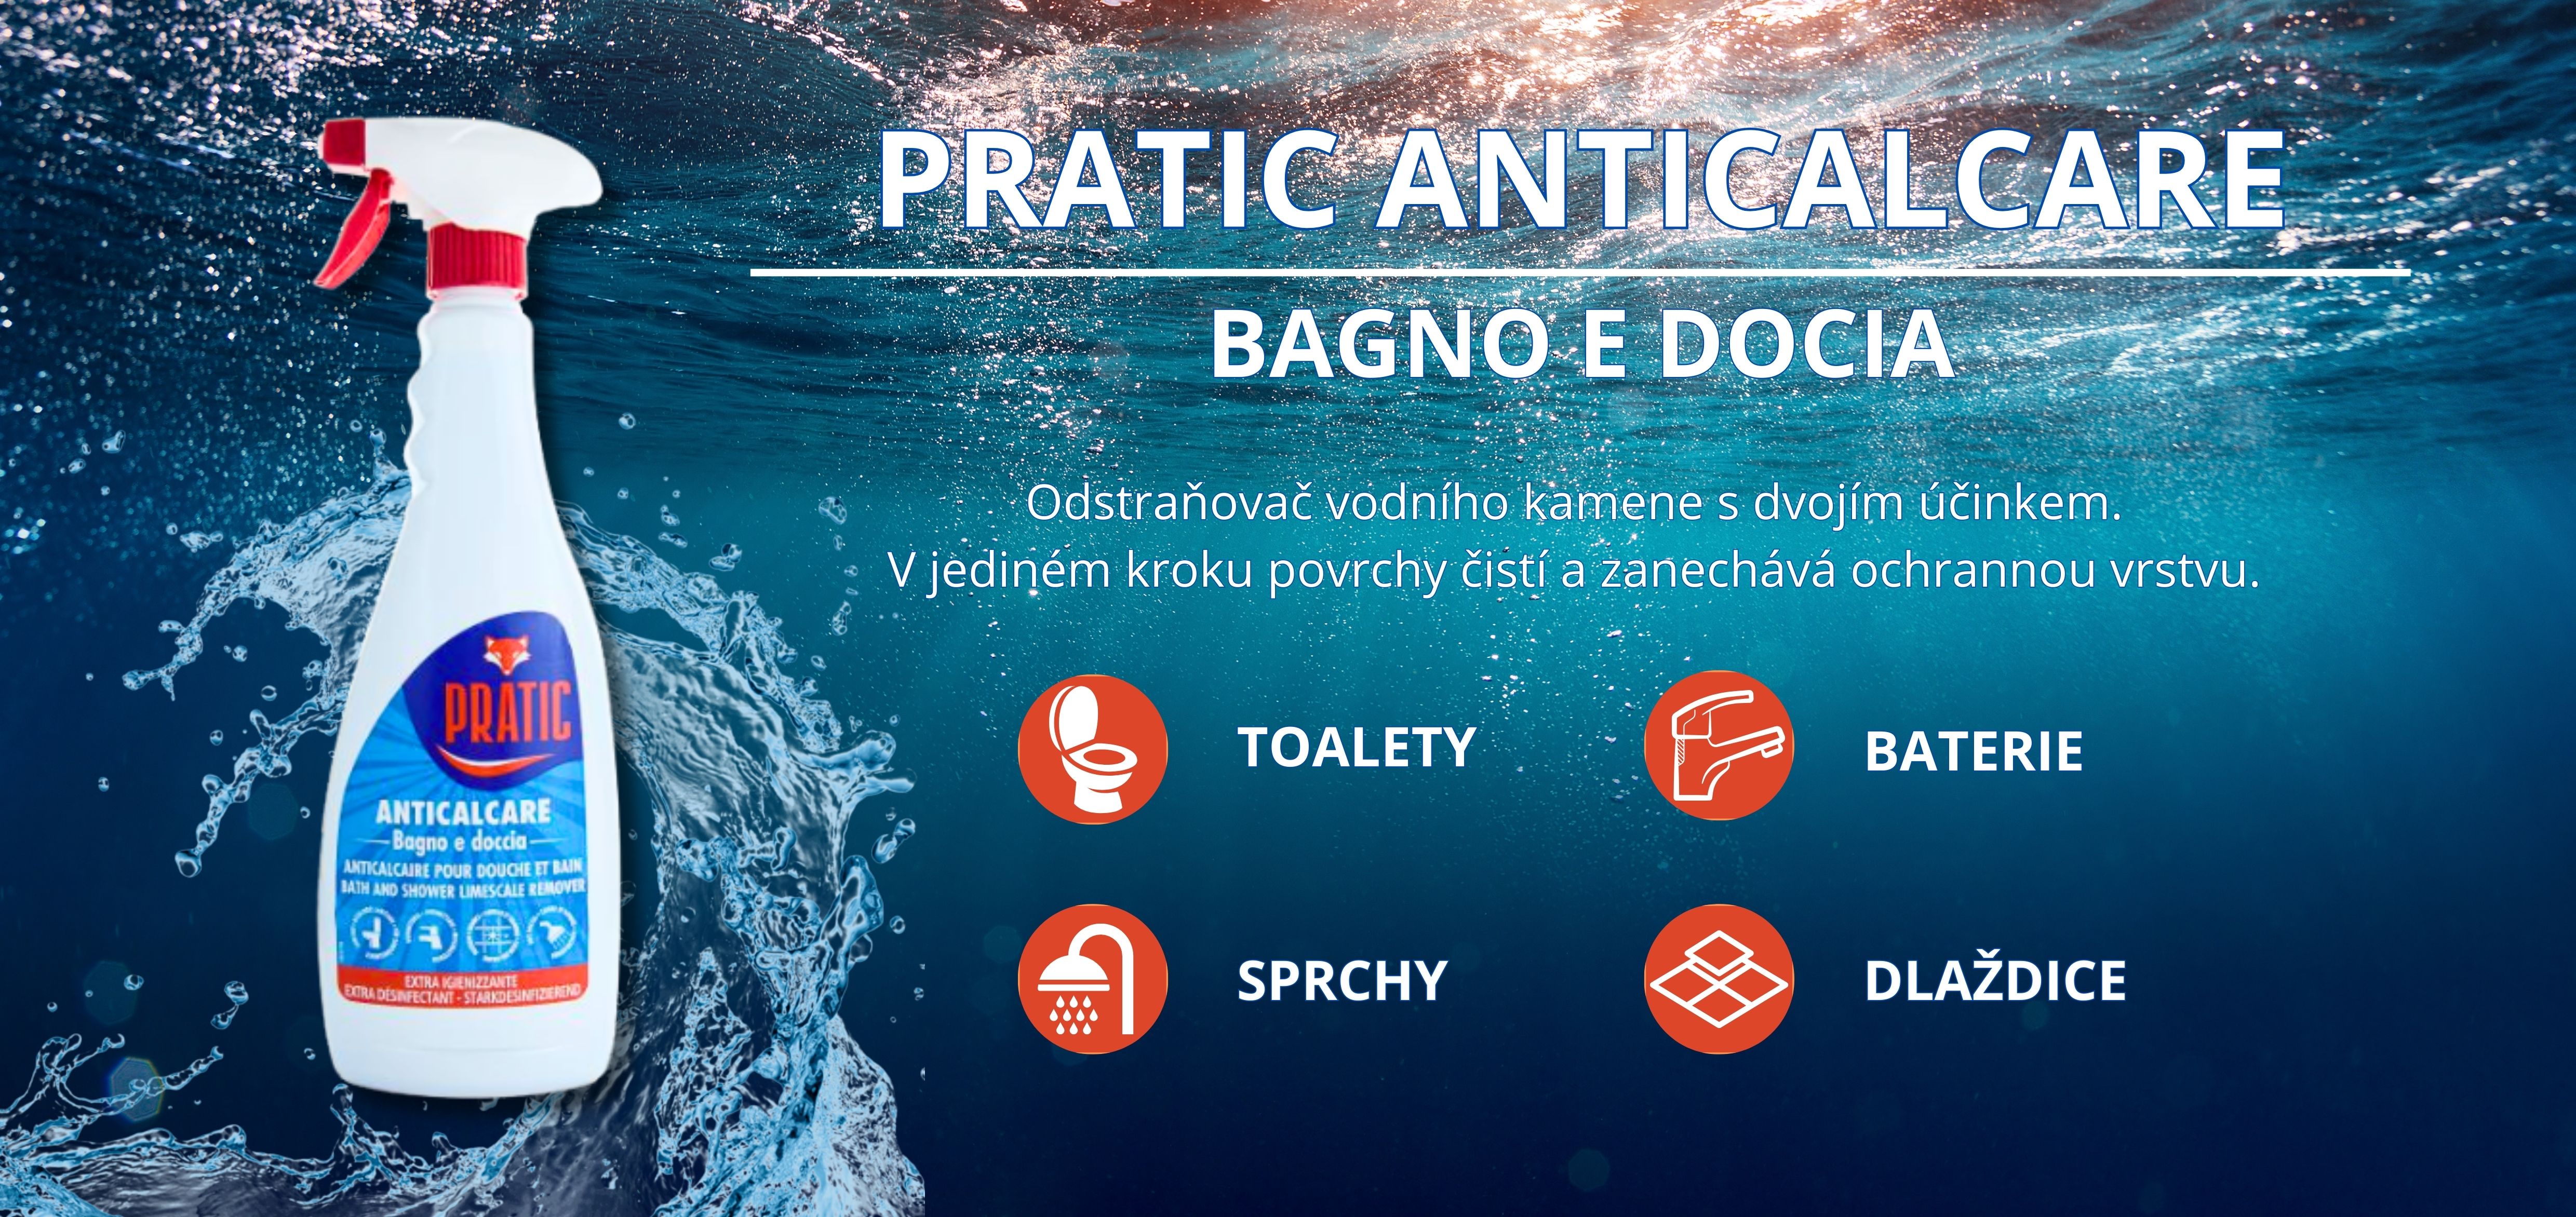 Pratic Anticalcare Bagno - Drogerie.cz